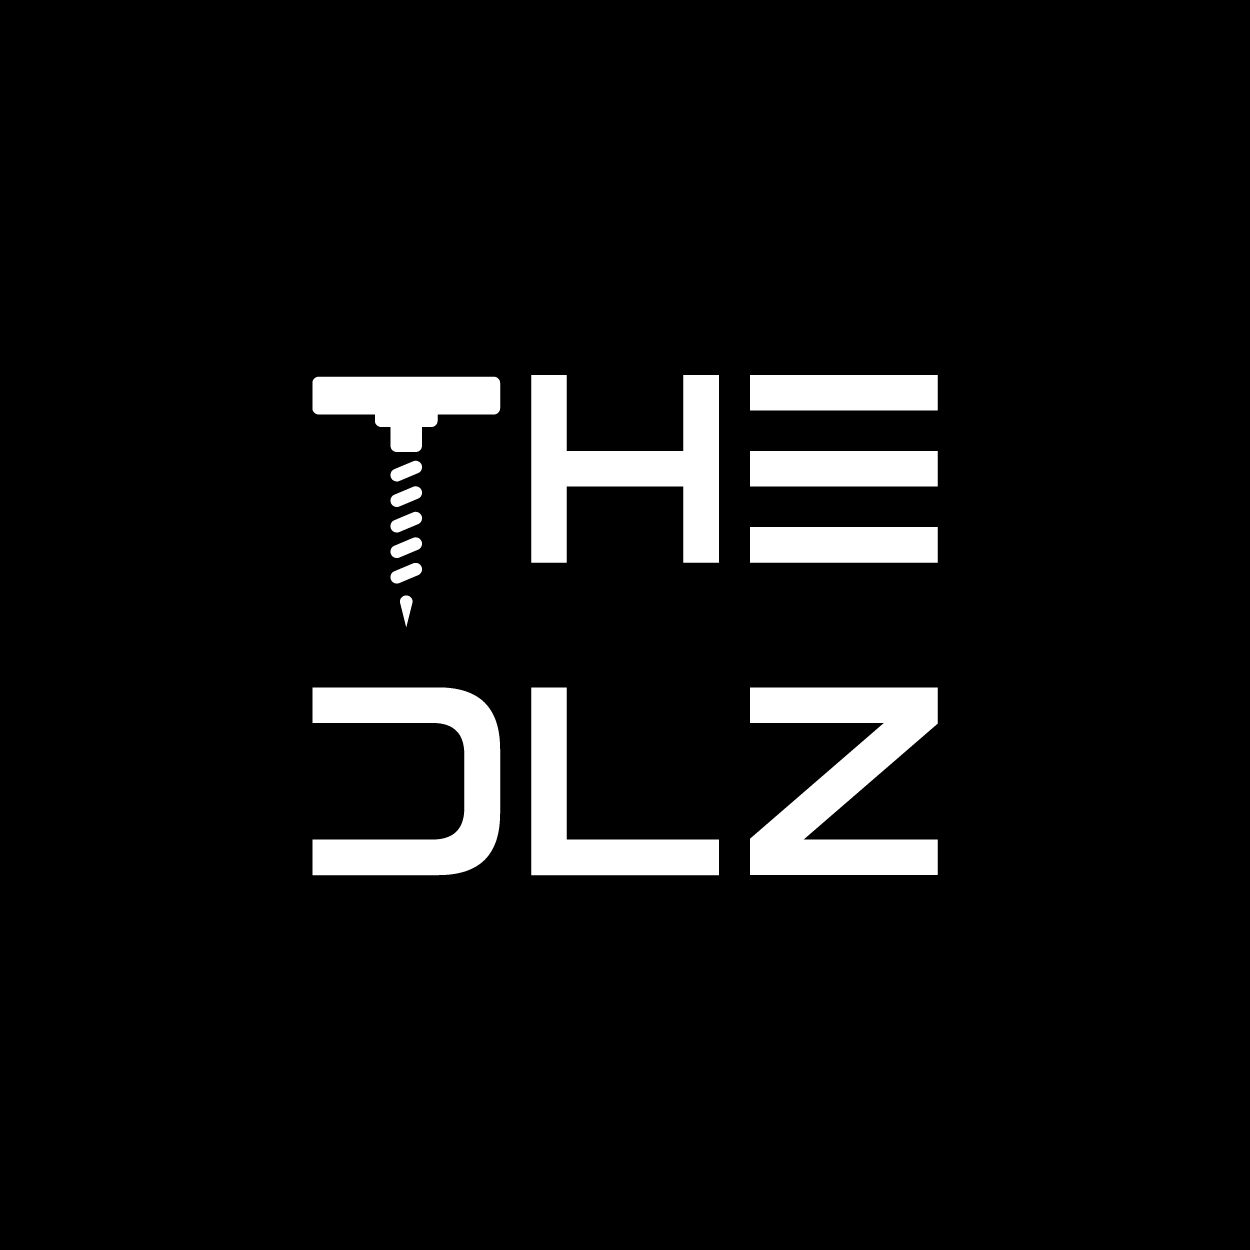 The DLZ